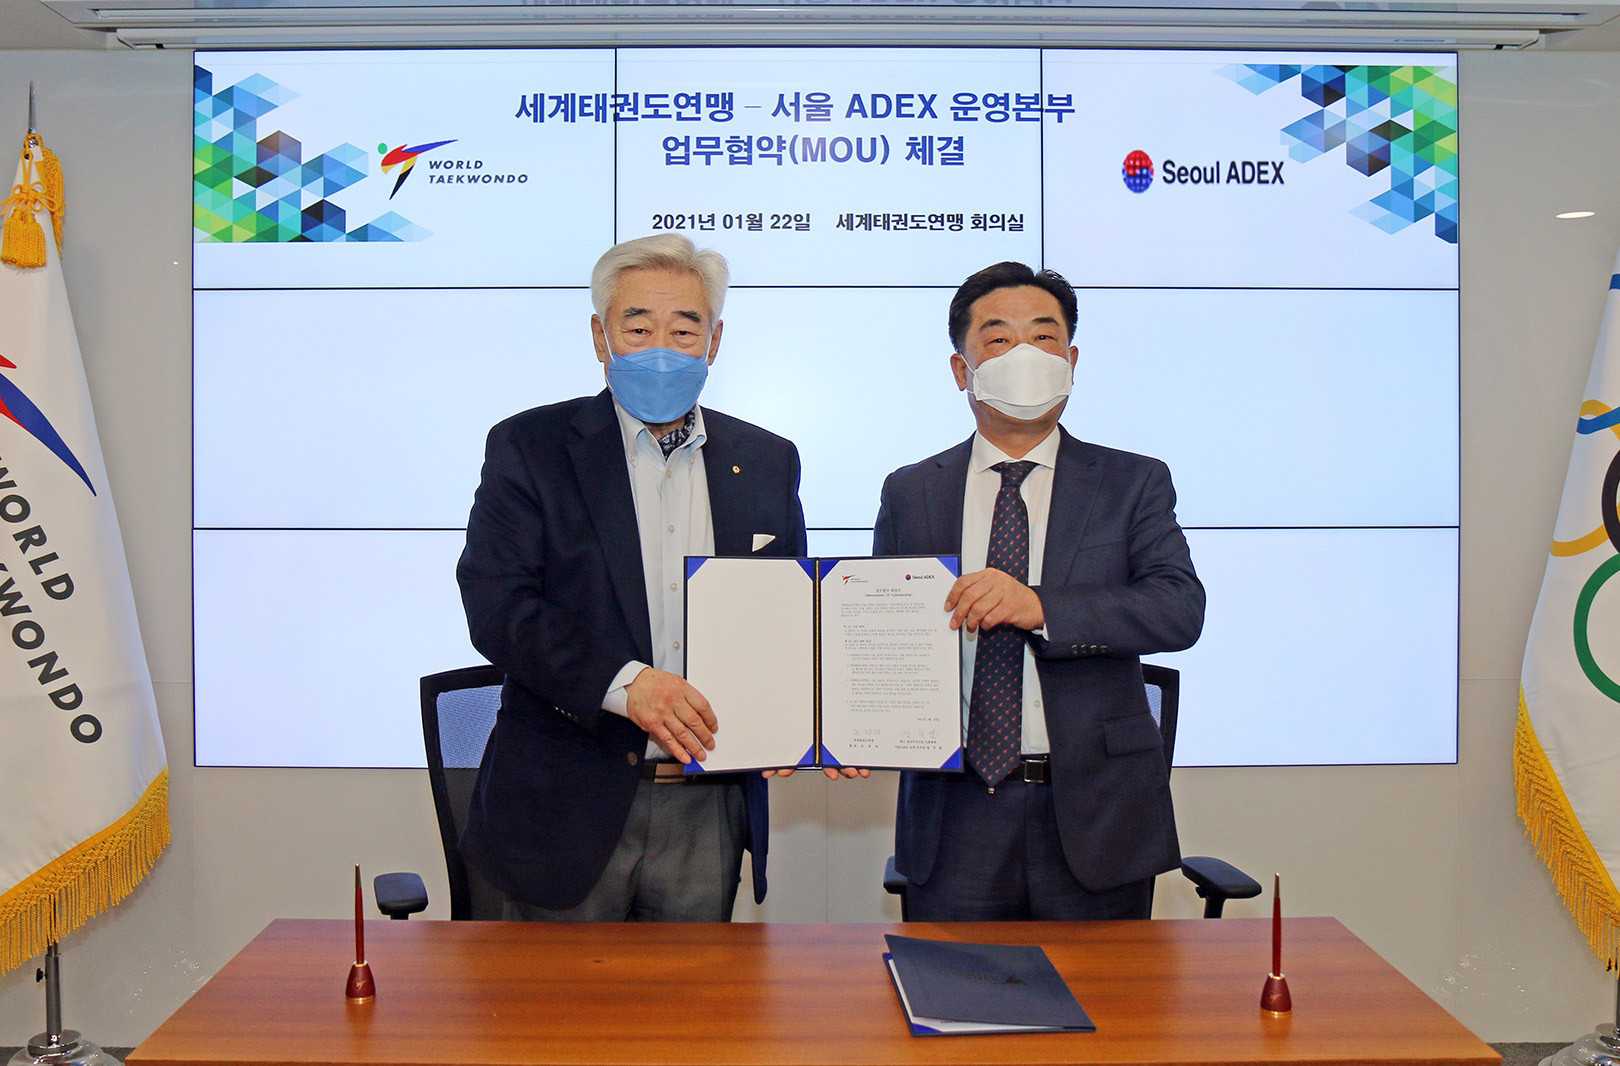 World Taekwondo has signed an MoU with organisers of the Seoul ADEX Air Show ©World Taekwondo